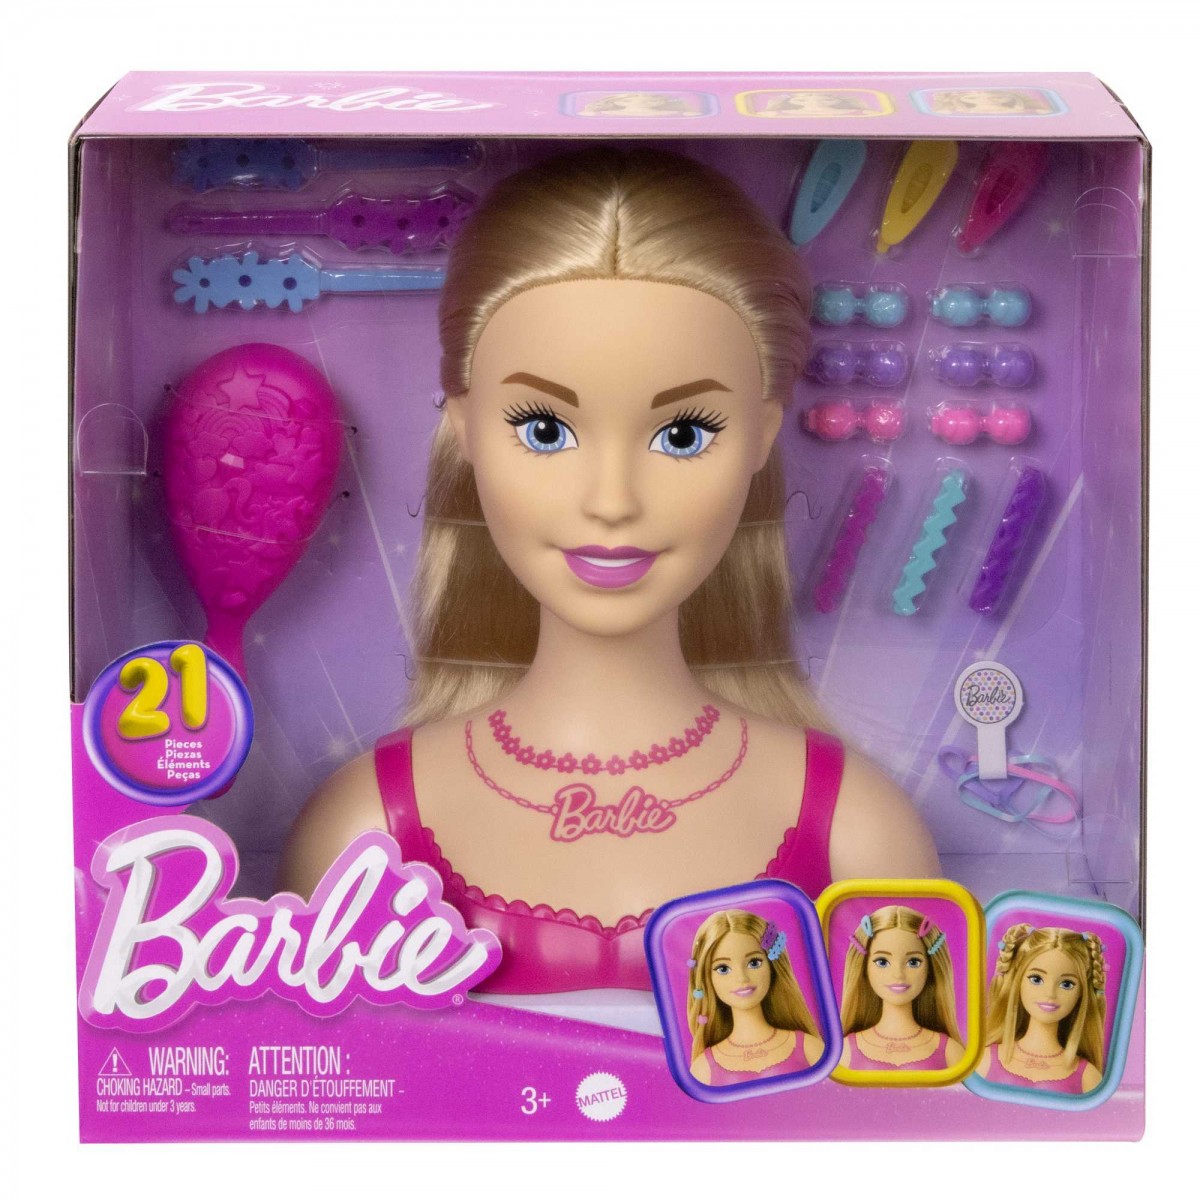  Barbie Fashionistas 8-Inch Styling Head, Brown Hair